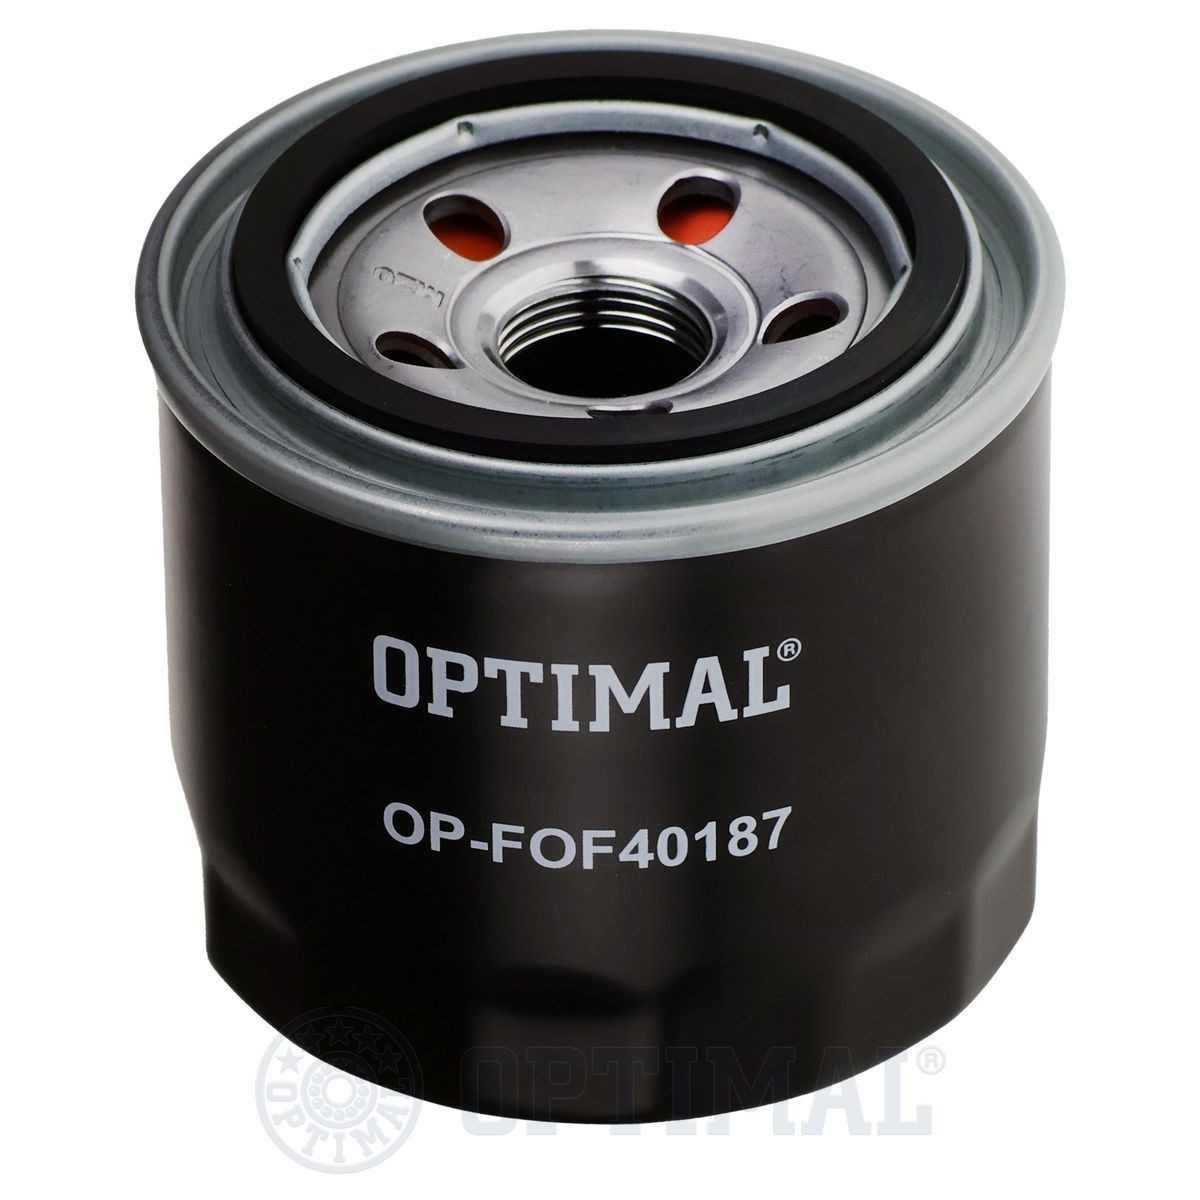 OPTIMAL OP-FOF40187 Oil filter 26300 35056